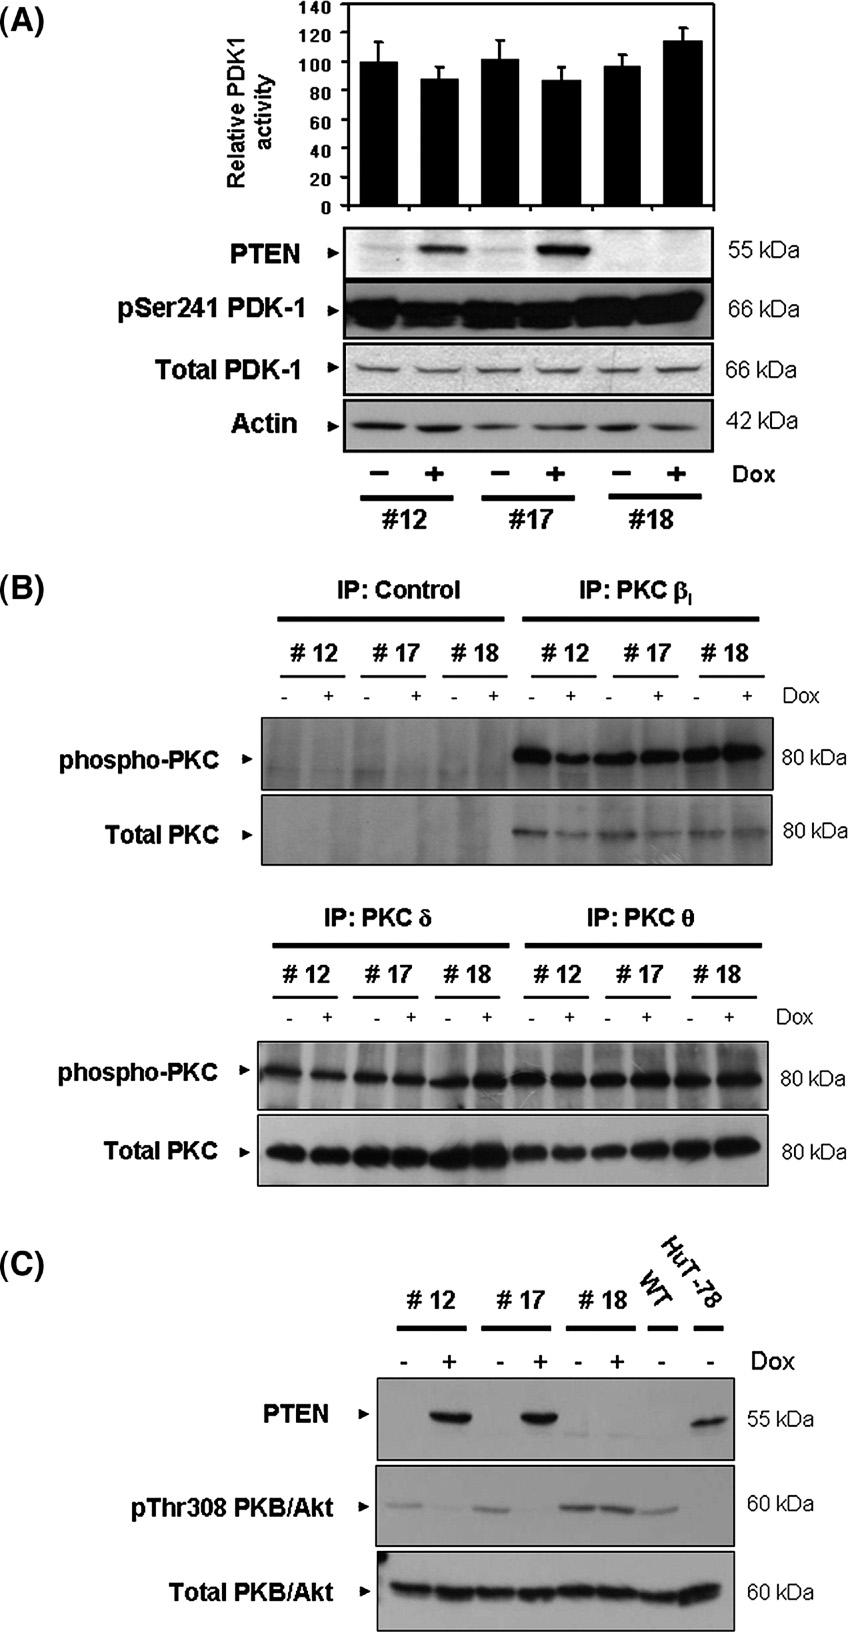 6 M. Freeley et al. / Cellular Signalling xx (2007) xxx xxx modulate the phosphorylation status of PKC θ at Thr538 in Jurkat cells (Supplementary Fig. 1).